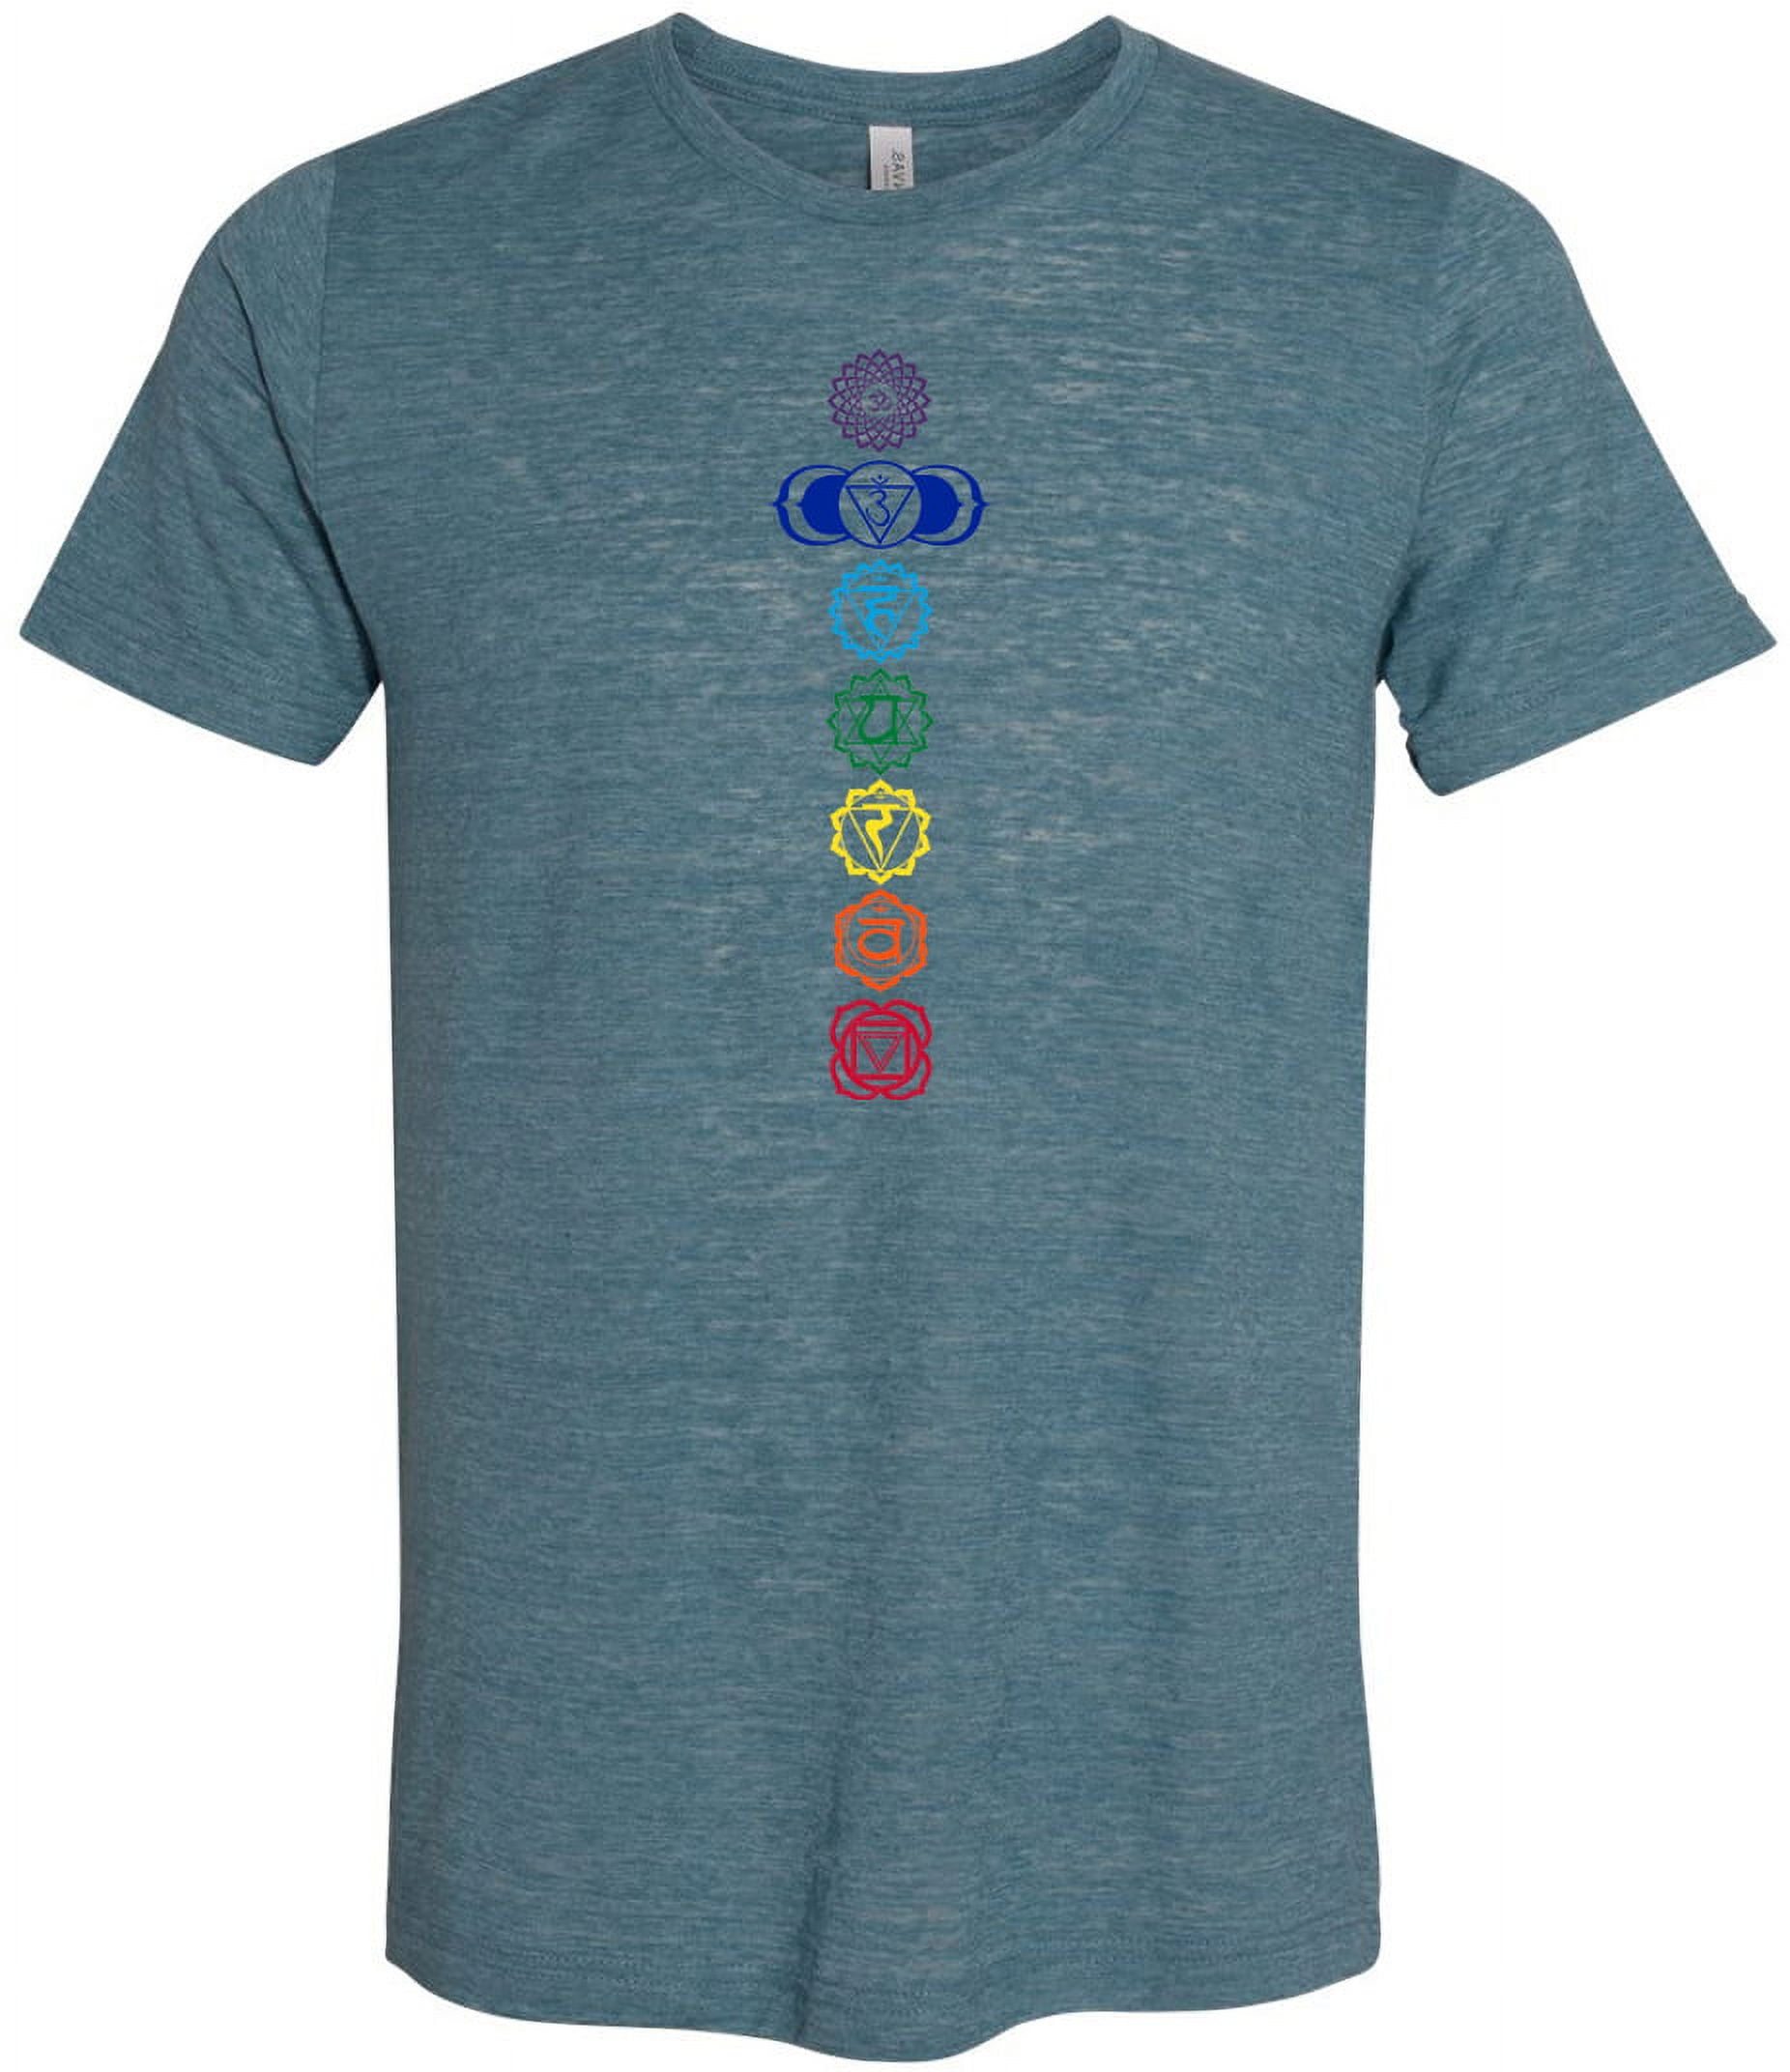 1.Buy Chakra Women's Yoga T-shirtPremium Yoga T-shirts for Women